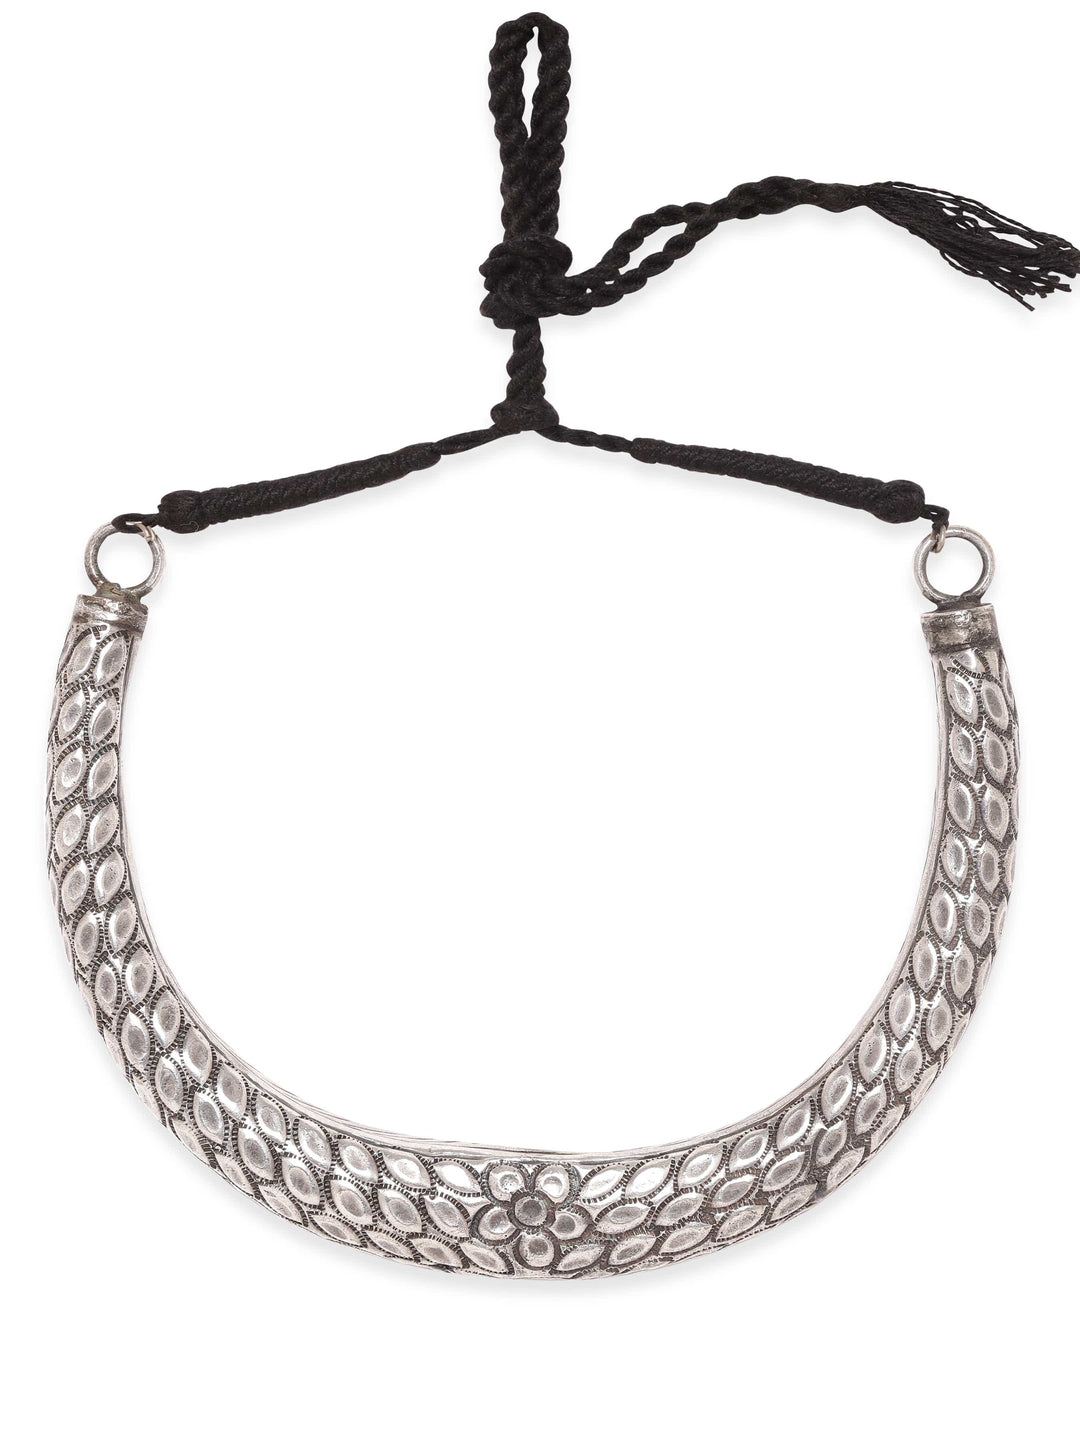 Rubans Elegant Oxidized Silver Plated Floral Choker Necklace Necklaces, Necklace Sets,